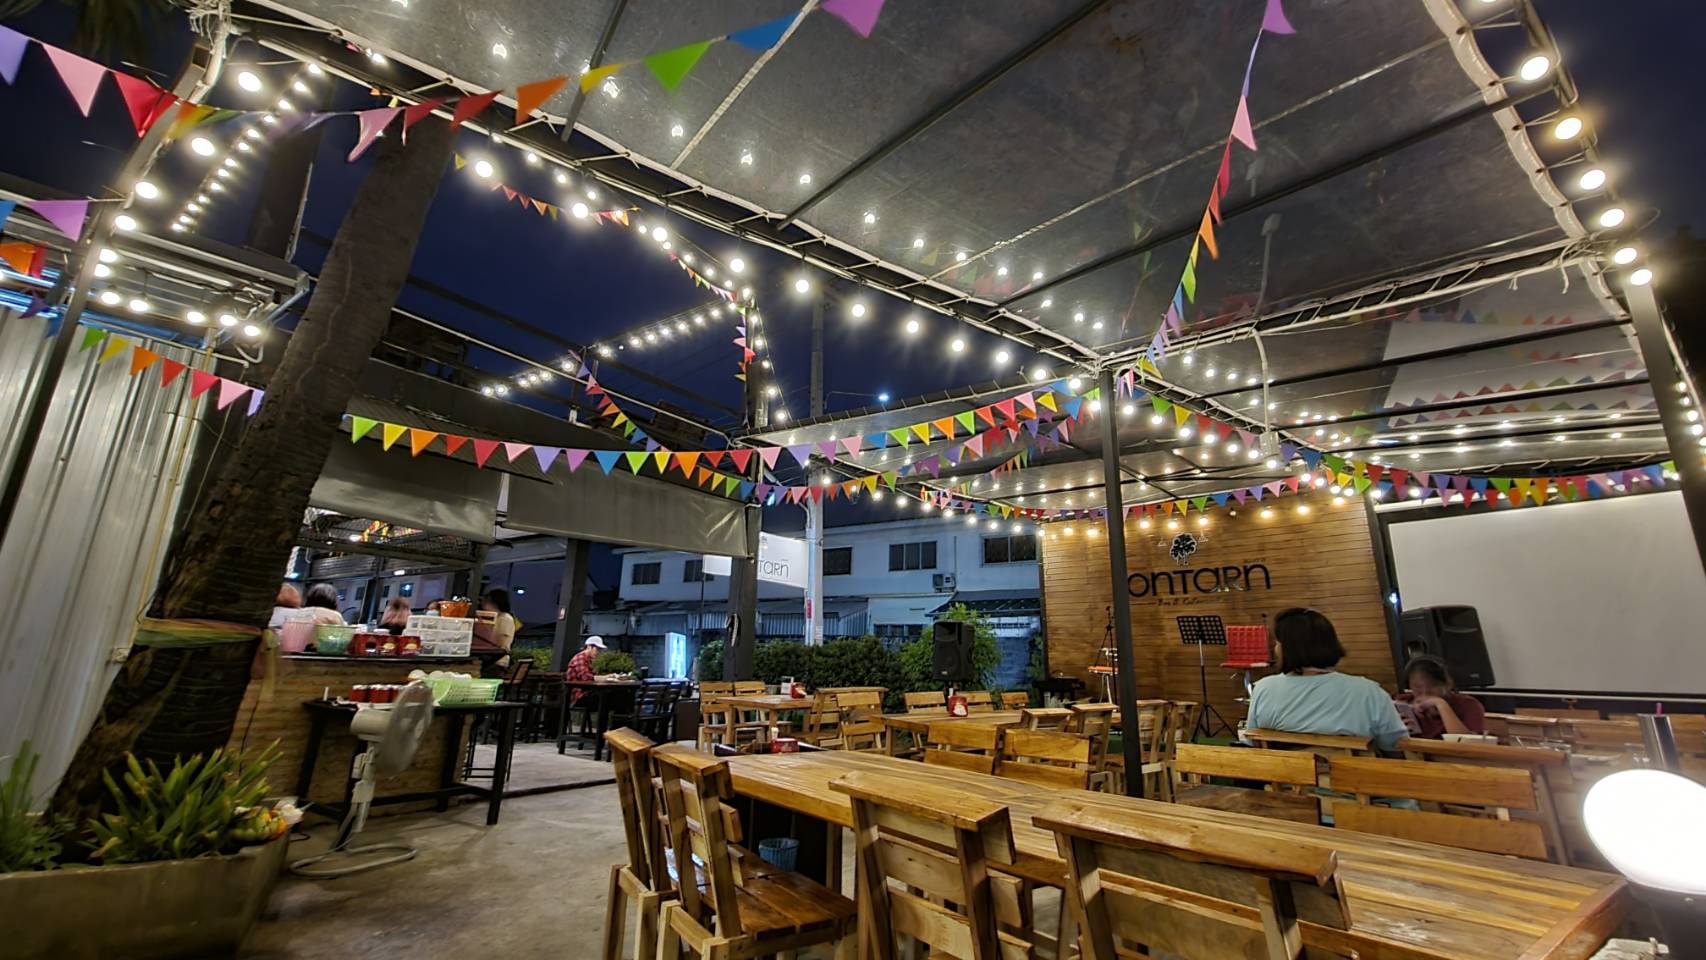 Lontarn Bar & Restaurant (Lontarn Bar & Restaurant) : ปทุมธานี (Pathum Thani)